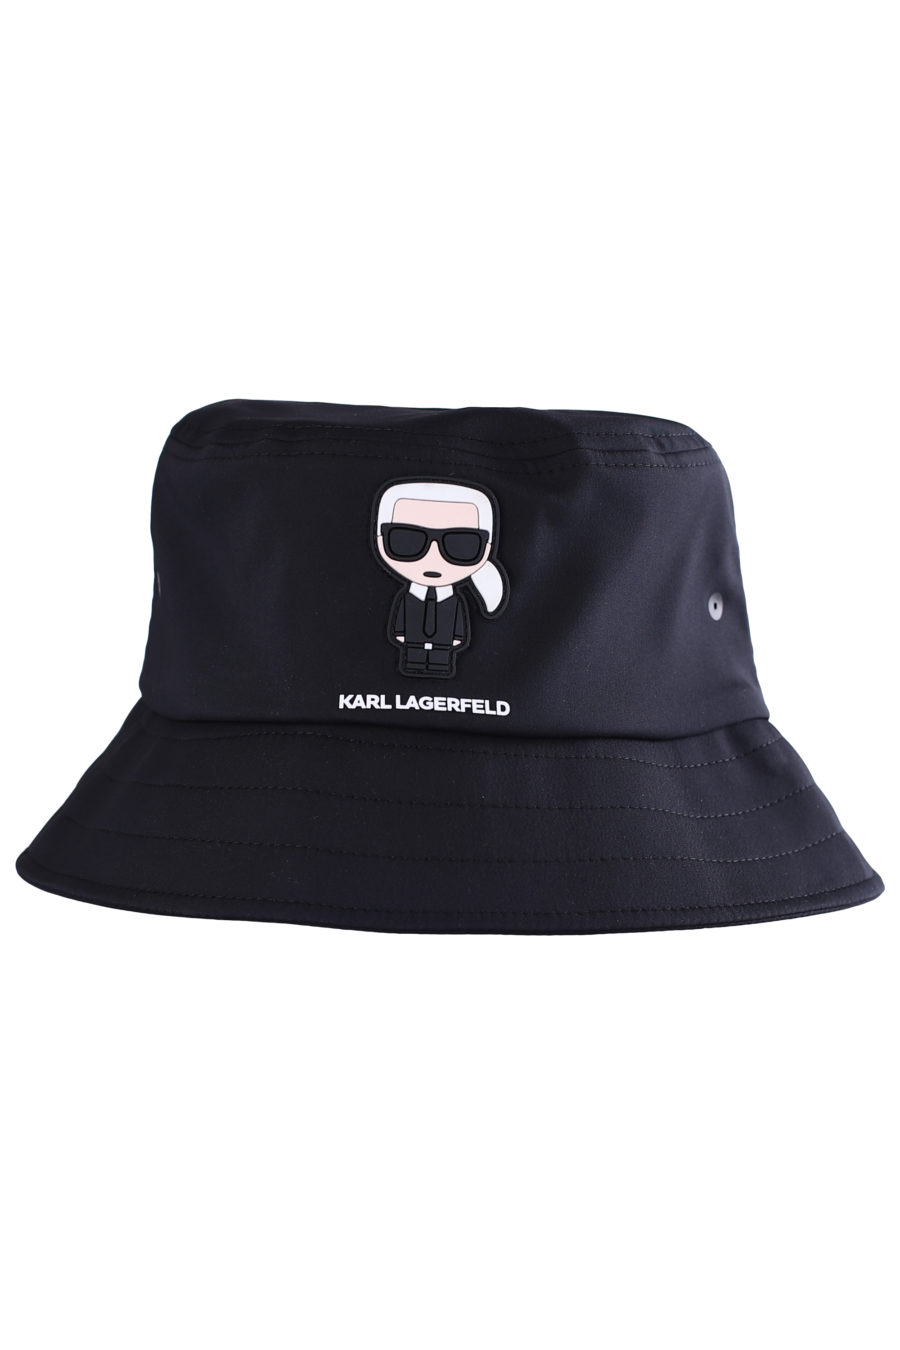 Sombrero de pescador negro con logotipo engomado "Karl" - IMG 0640